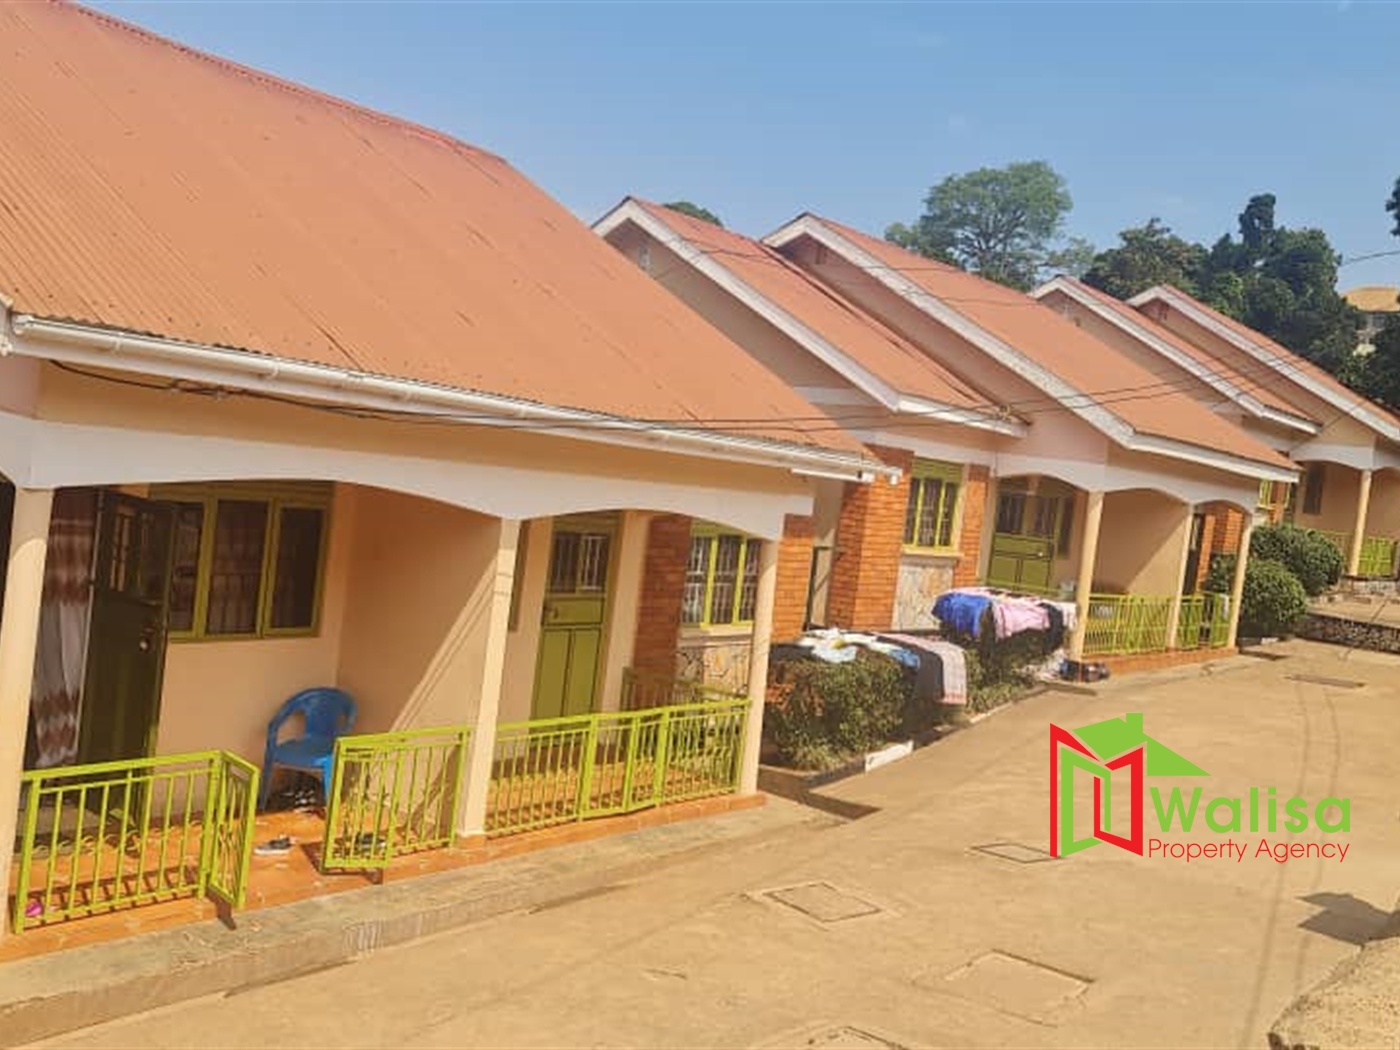 Rental units for sale in Nyanama Kampala